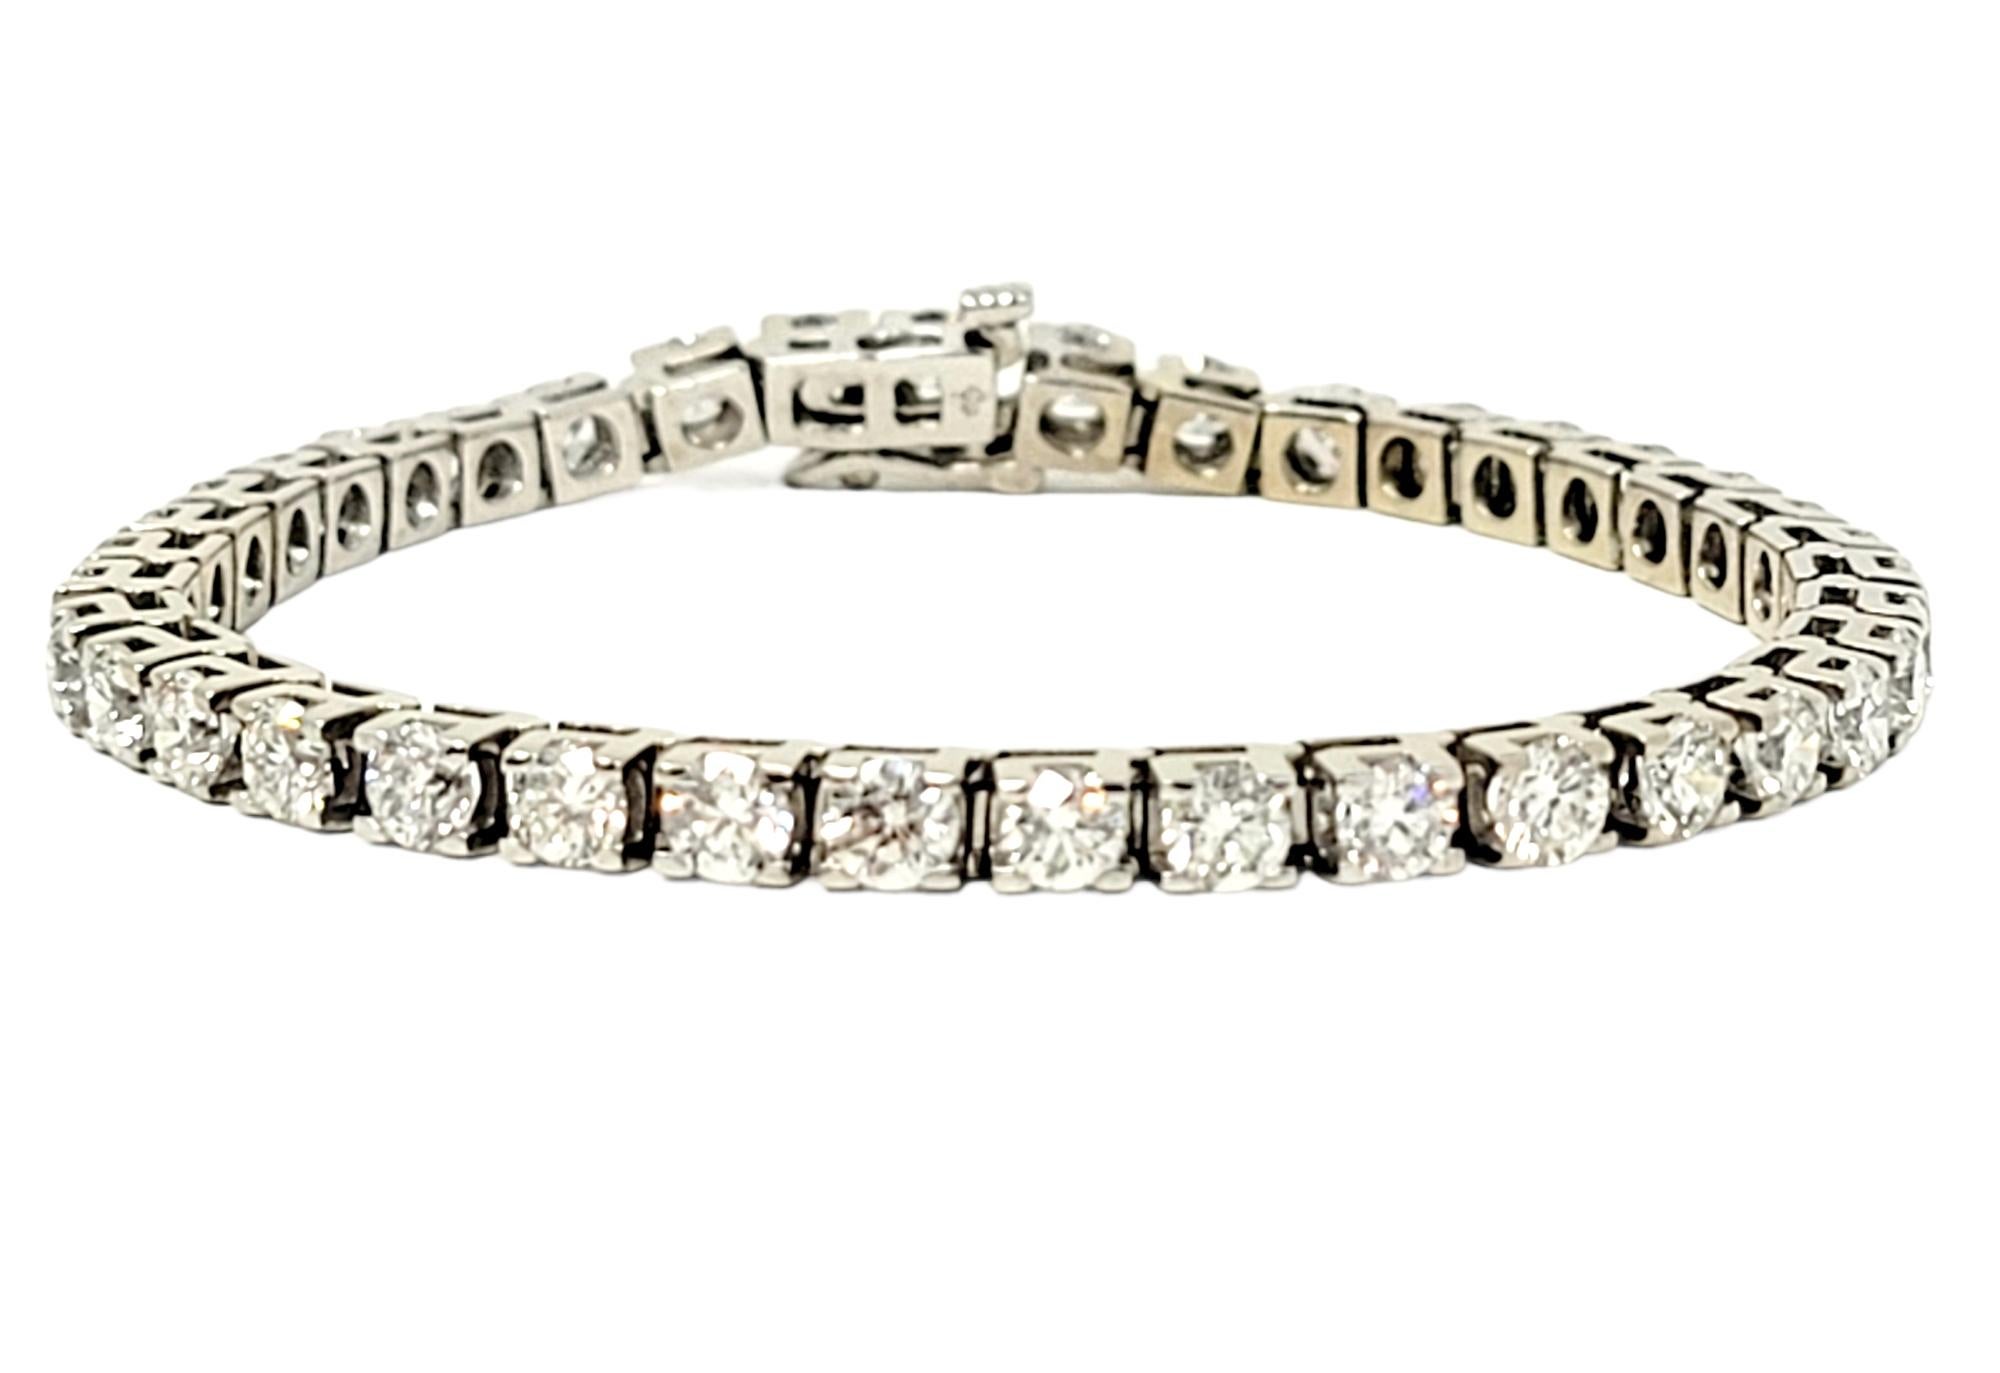 7.63 Carats Total Round Brilliant Diamond Tennis Bracelet in 14 Karat White Gold In Good Condition For Sale In Scottsdale, AZ